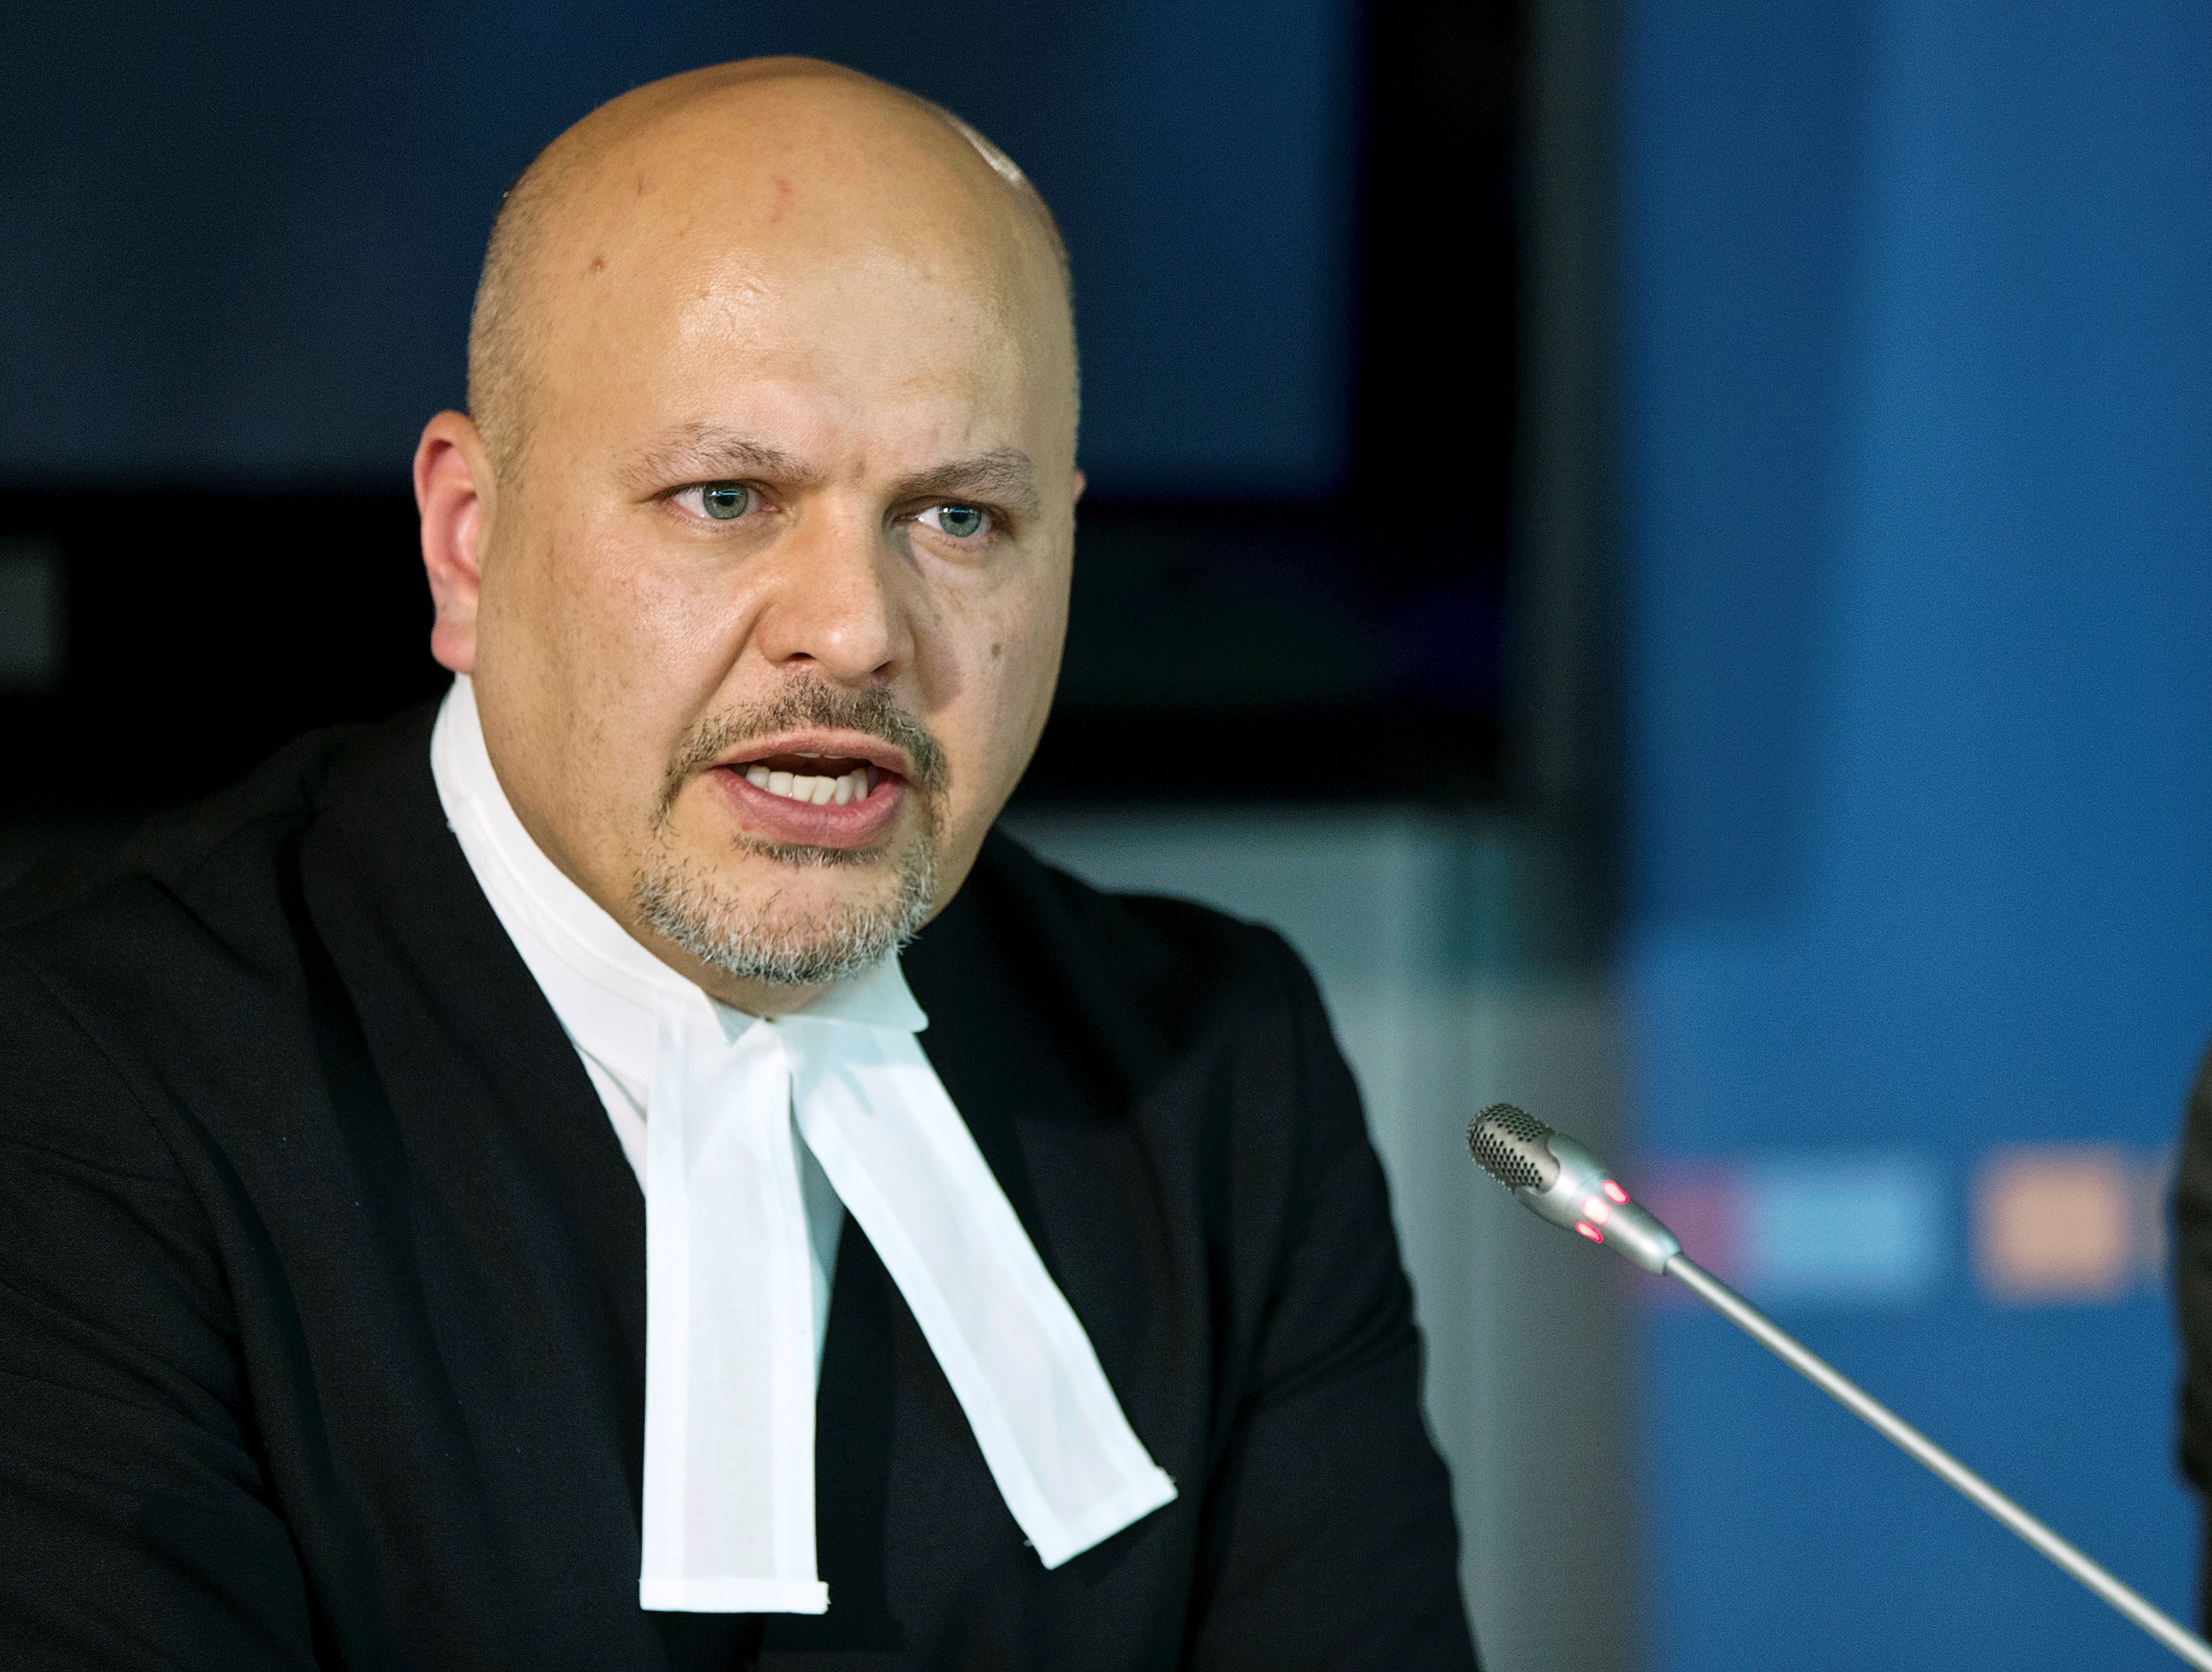 Britain’s Karim Khan elected International Criminal Court prosecutor